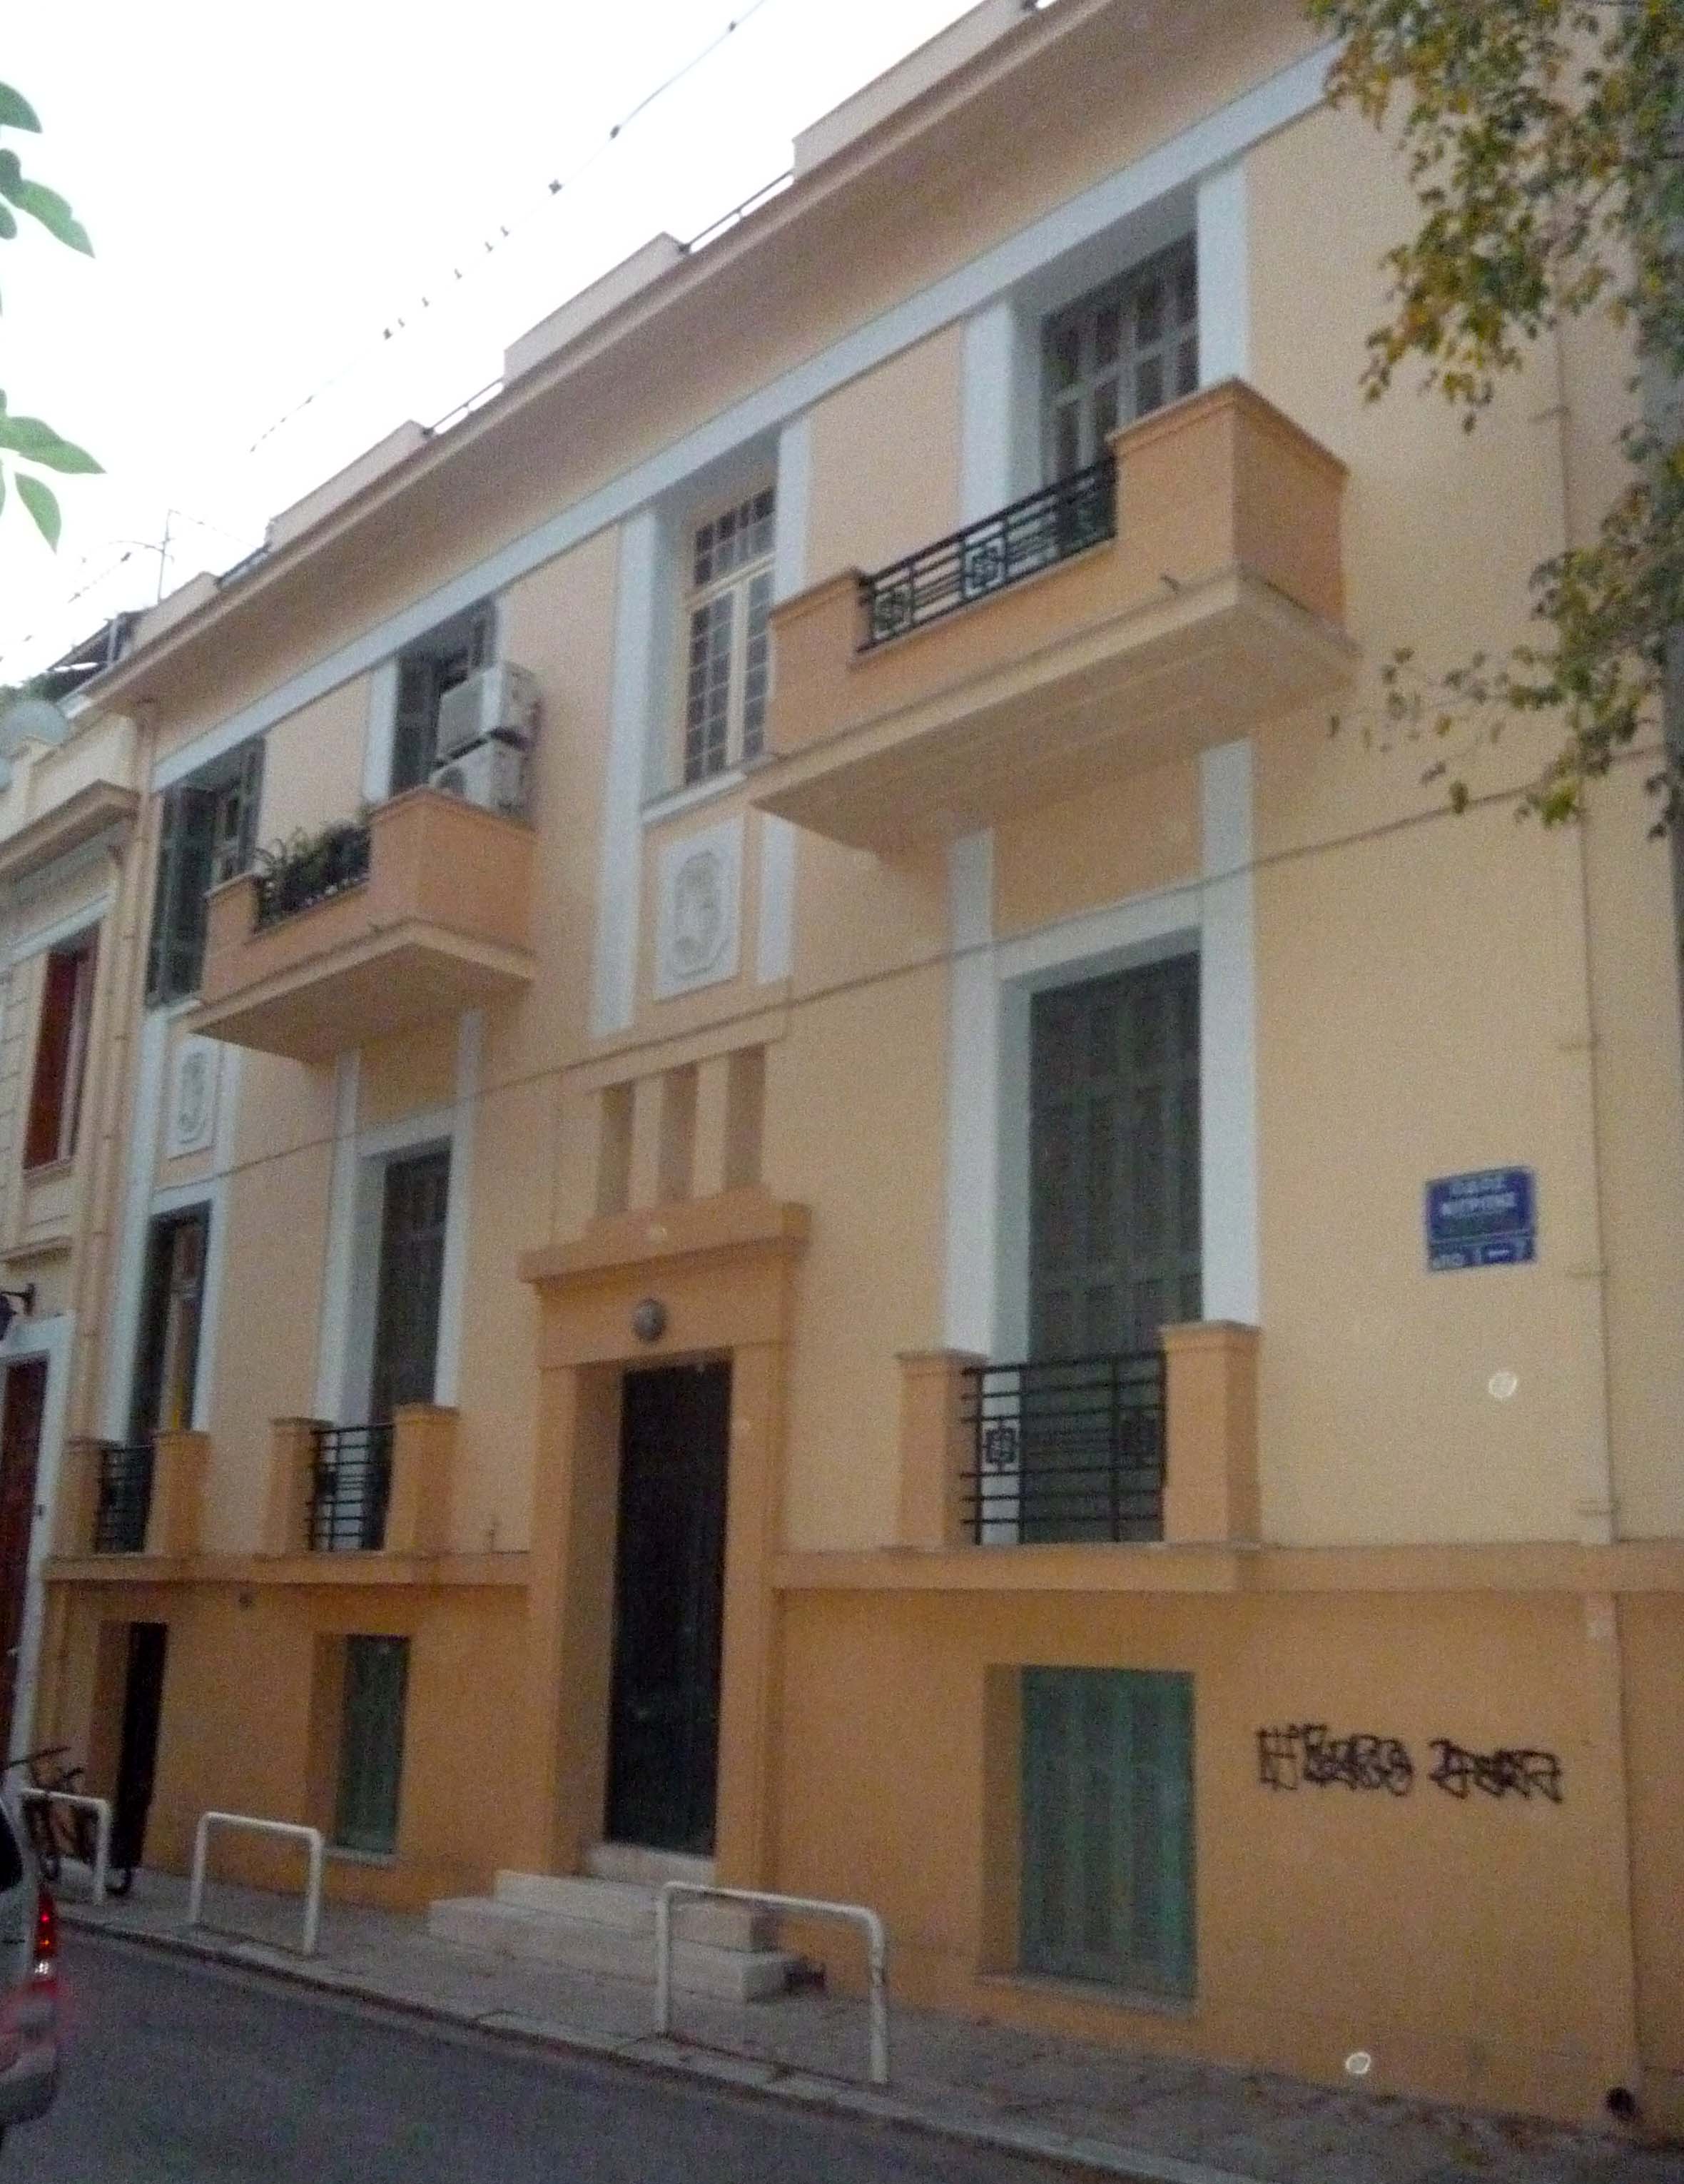 View of the façade on Nigritis street